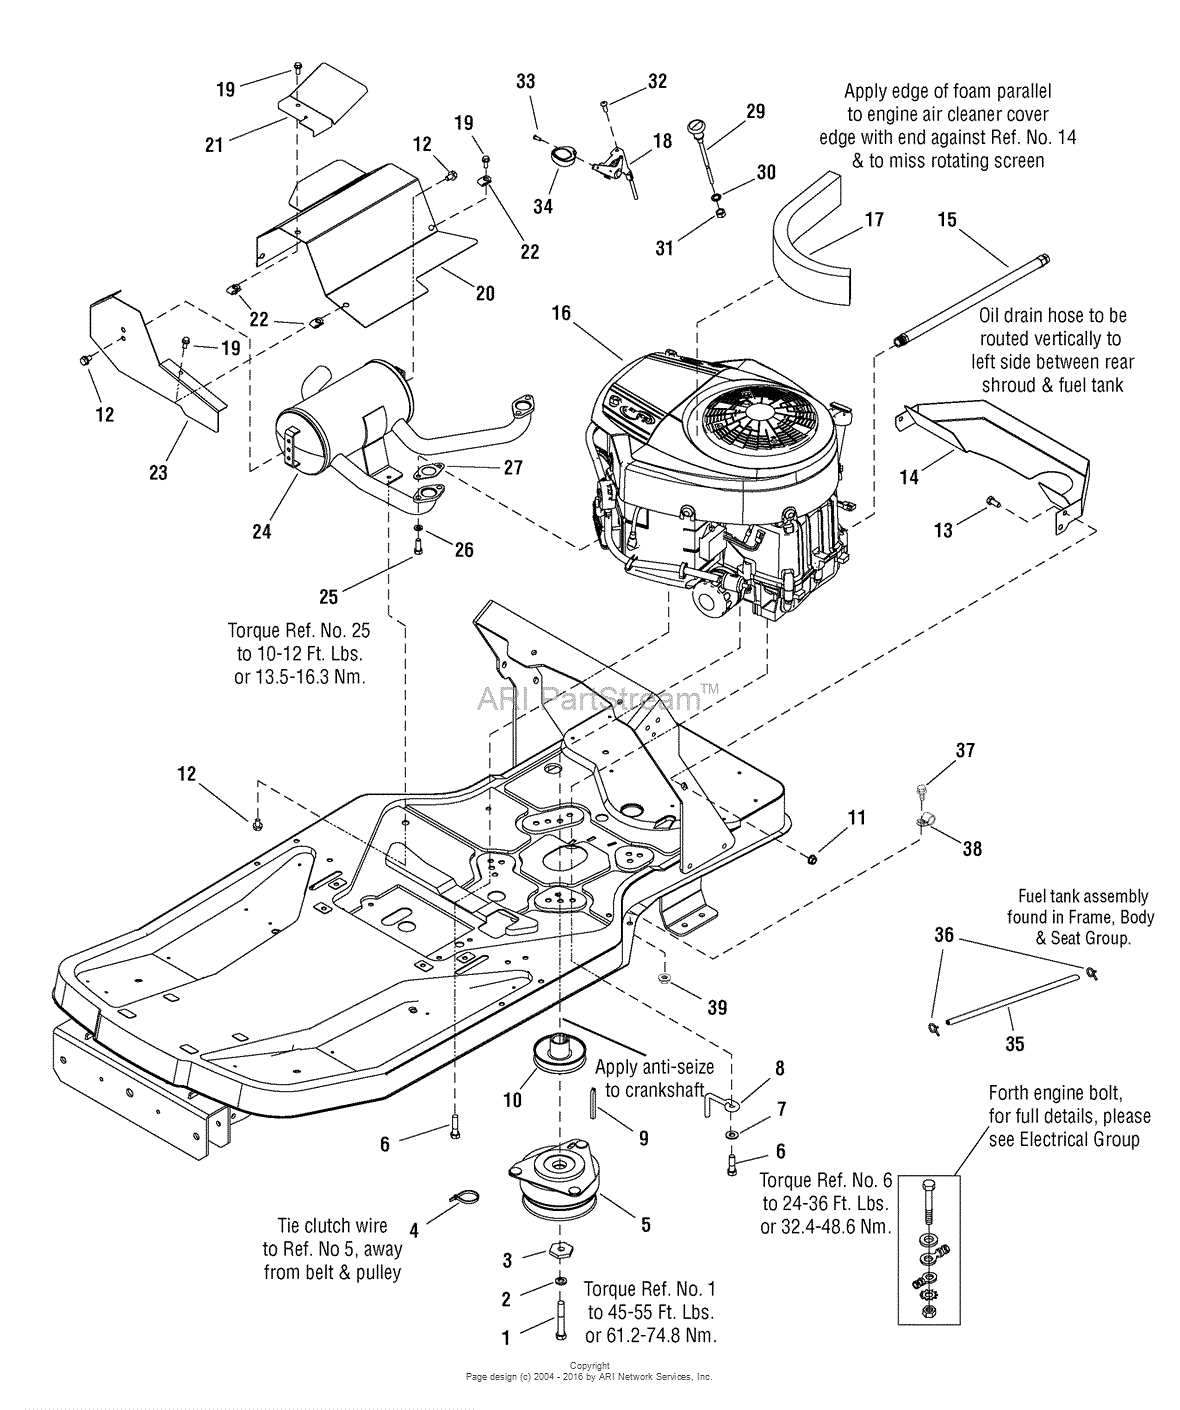 briggs and stratton engine 402707-1205-01 simplicity wiring diagram